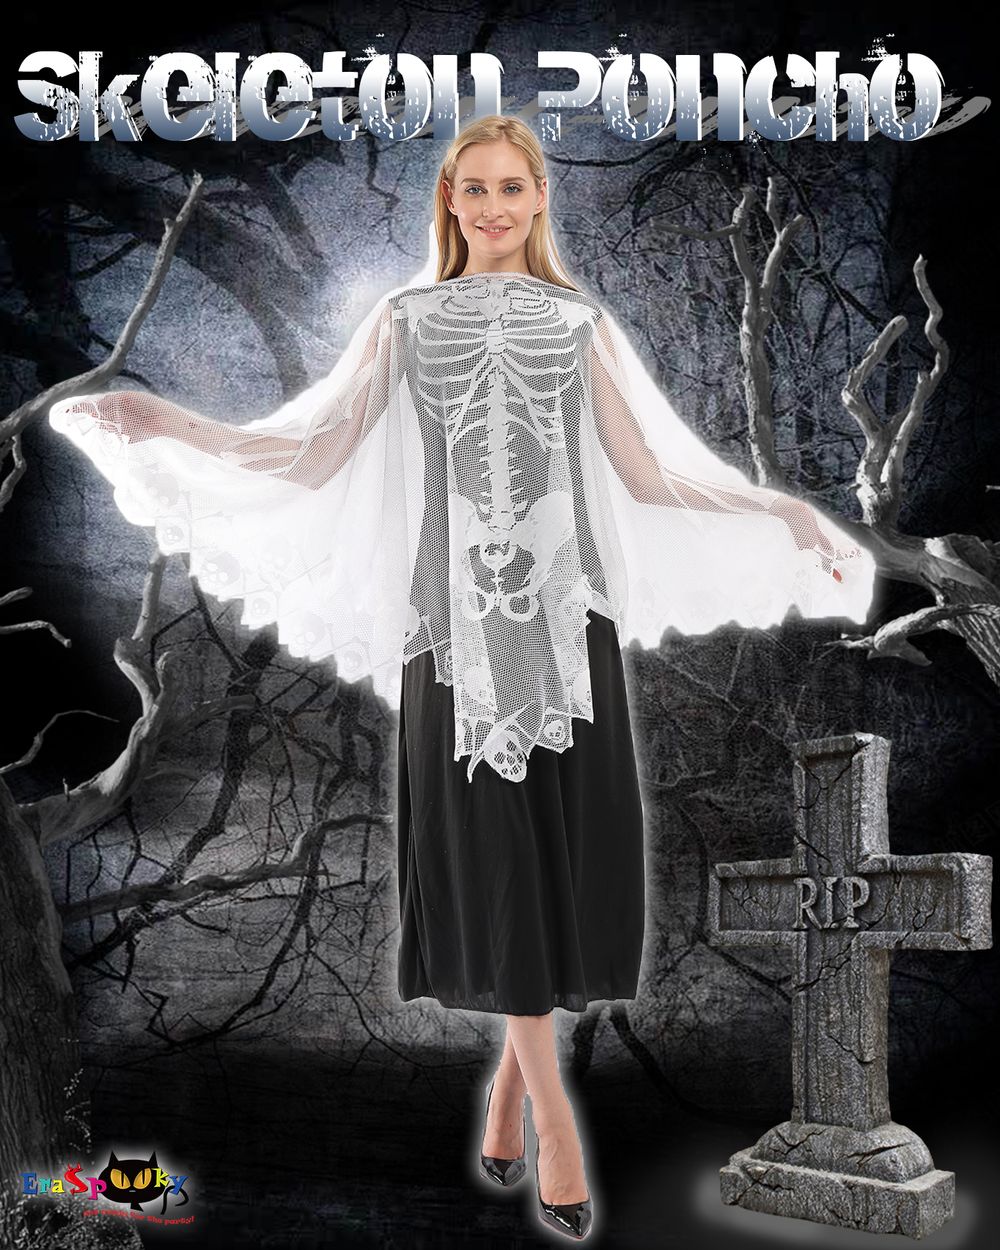 EraSpooky Damen Skelett Poncho Halloween Tag der Toten Partykostüm